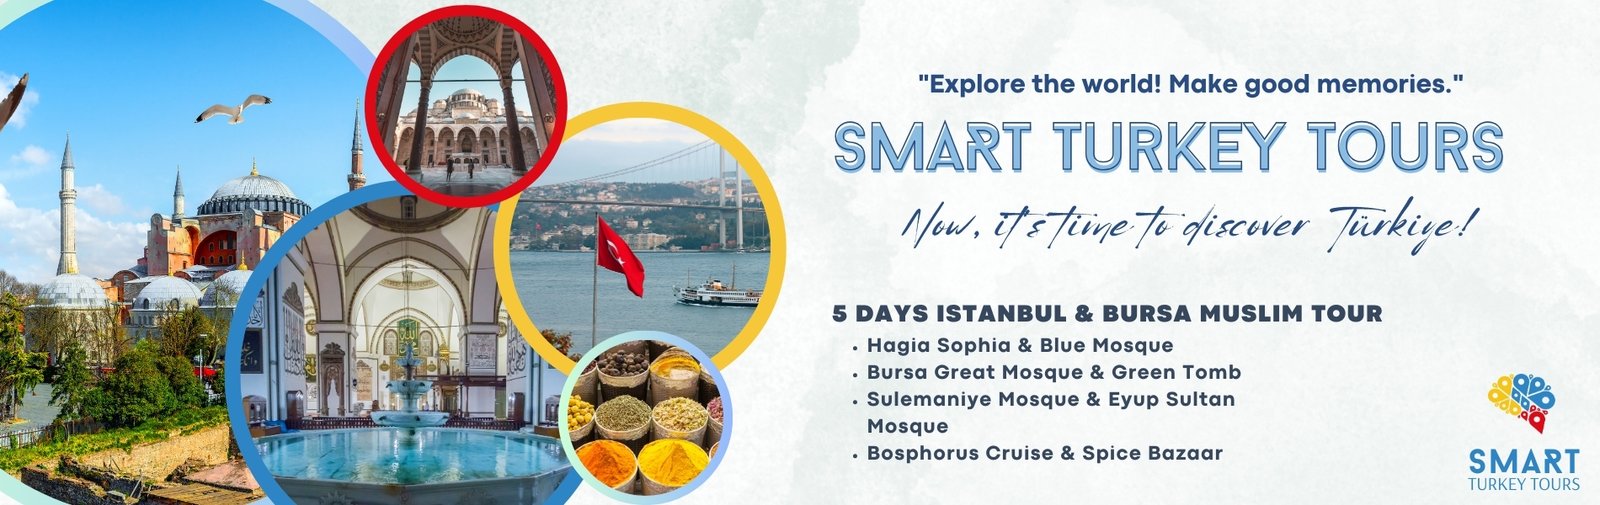 5 DAYS ISTANBUL & BURSA MUSLIM TOUR / Istanbul, Bursa